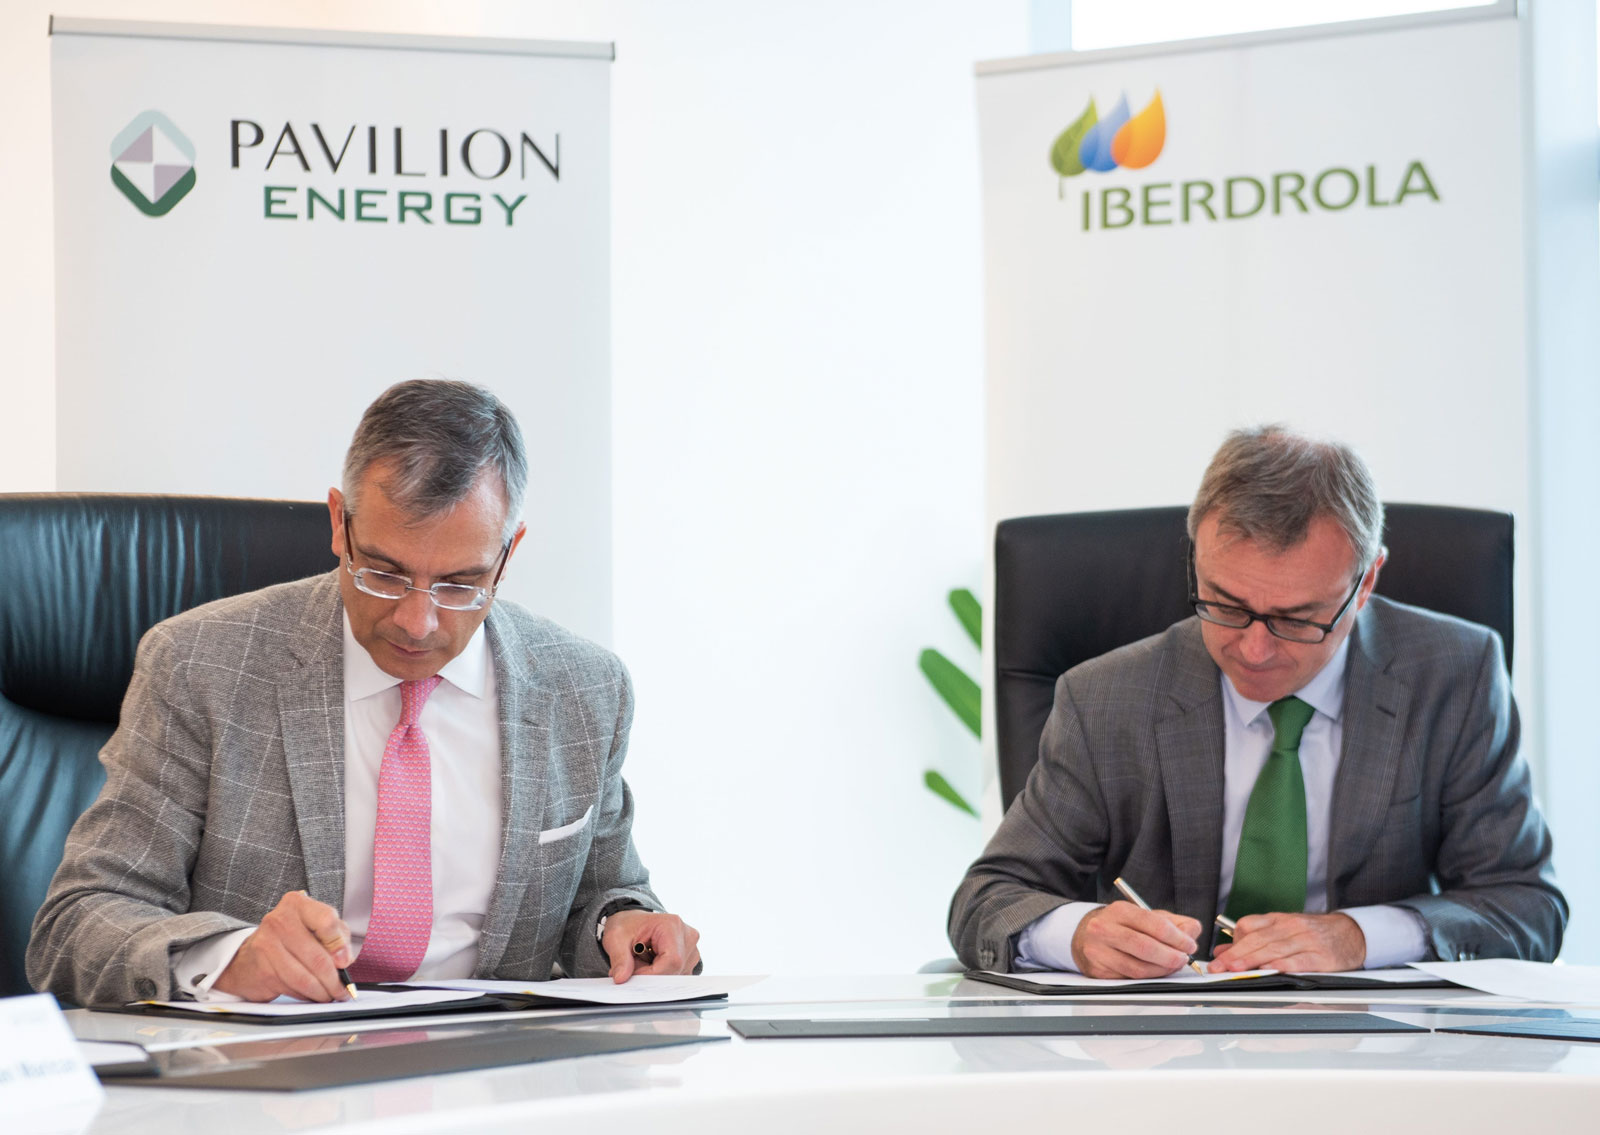 Pavilion Energy buys Iberdrola's LNG assets